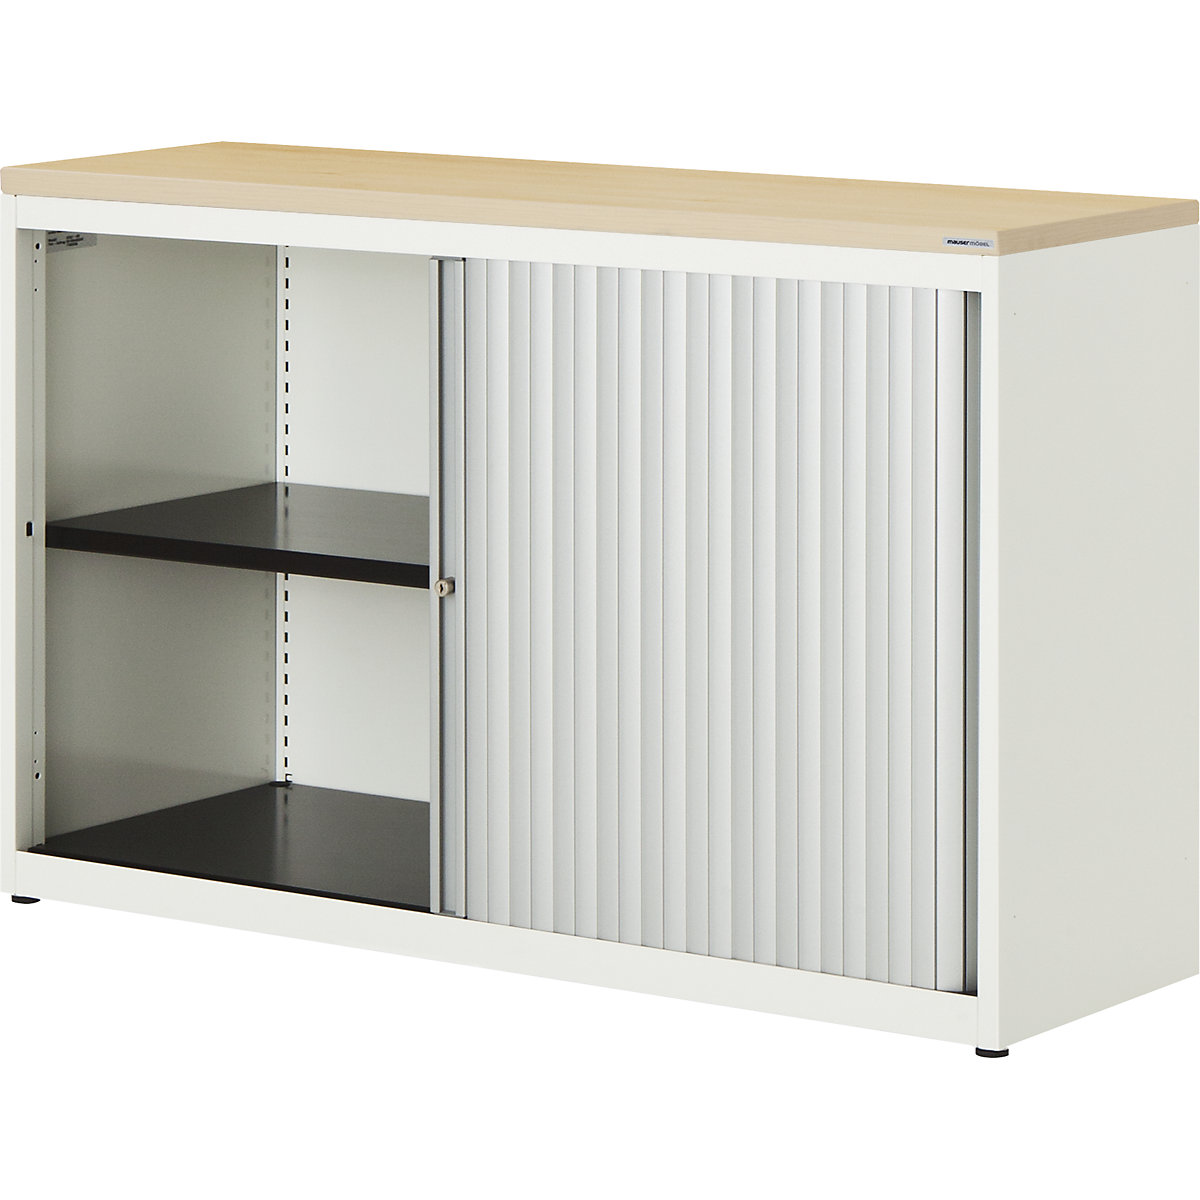 Horizontal roller shutter cupboard – mauser, HxWxD 830 x 1200 x 432 mm, plastic panel, 1 shelf, pure white / aluminium colour / maple-5